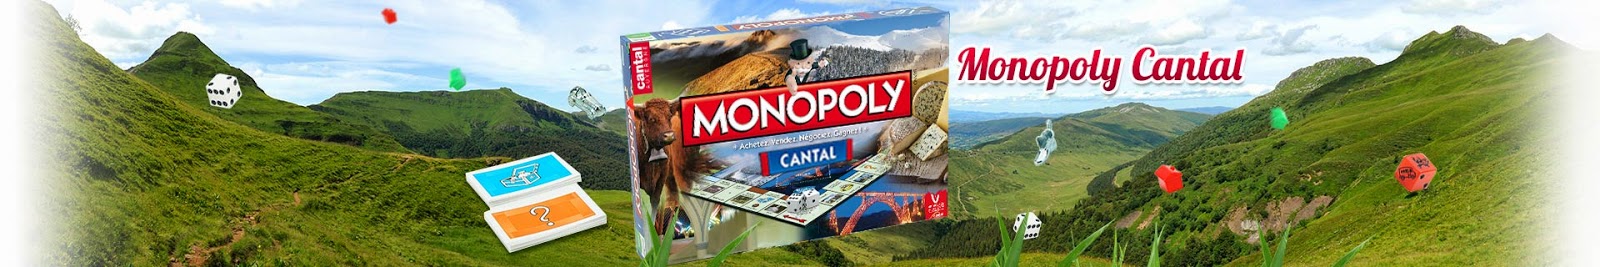 http://www.bm-services.com/monopoly-cantal/